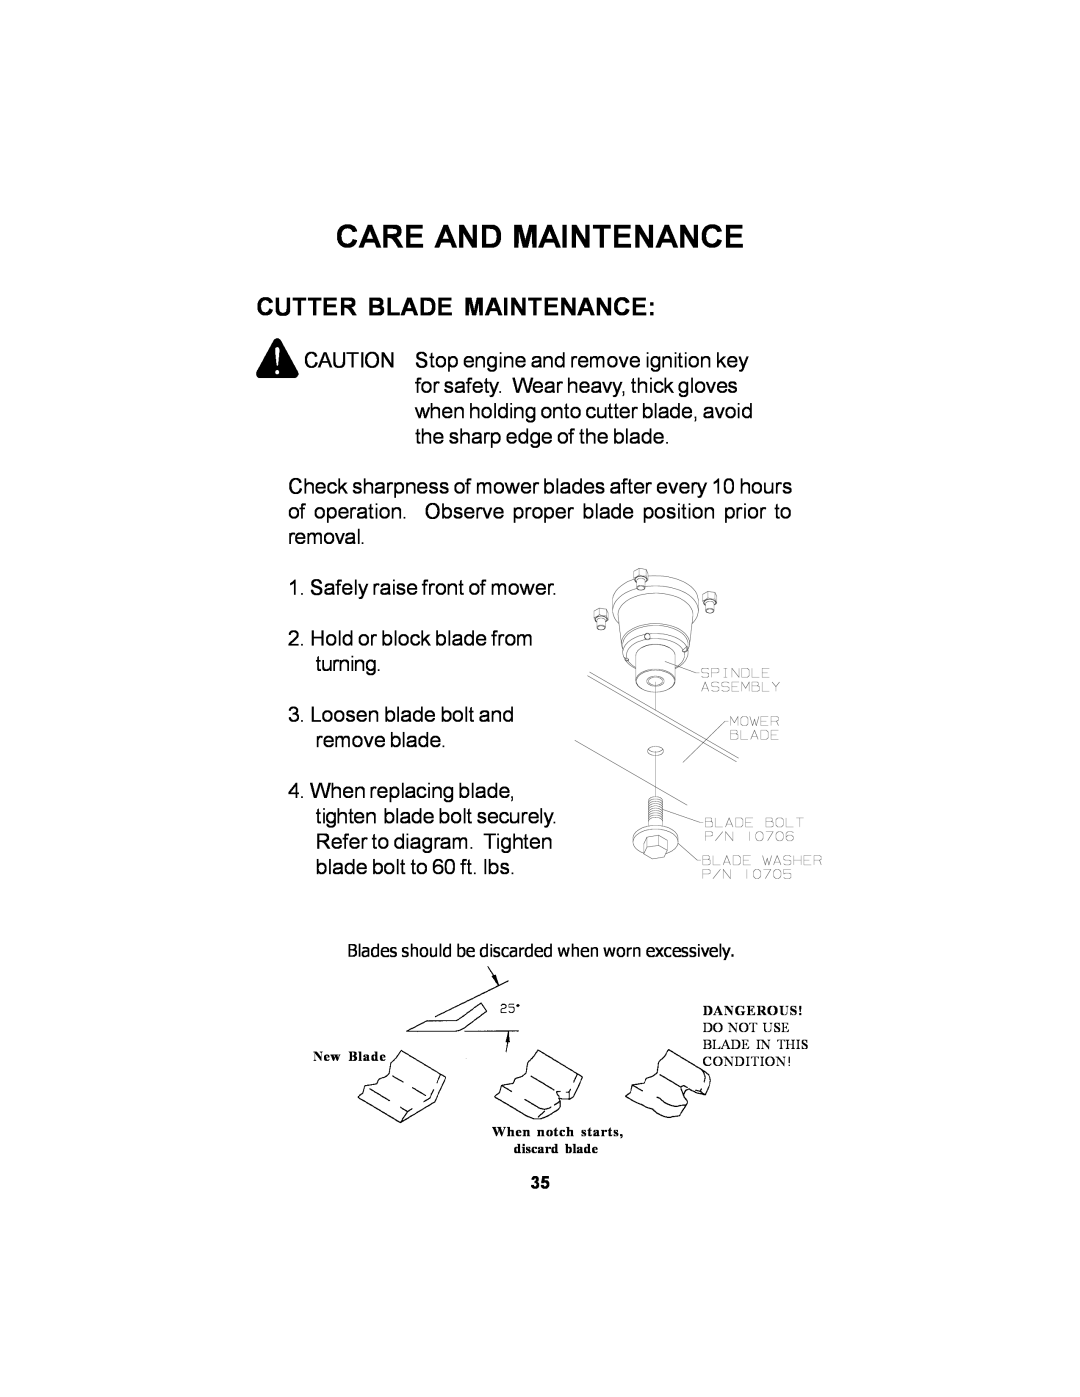 Dixon 11249-106 manual Cutter Blade Maintenance, Care And Maintenance 